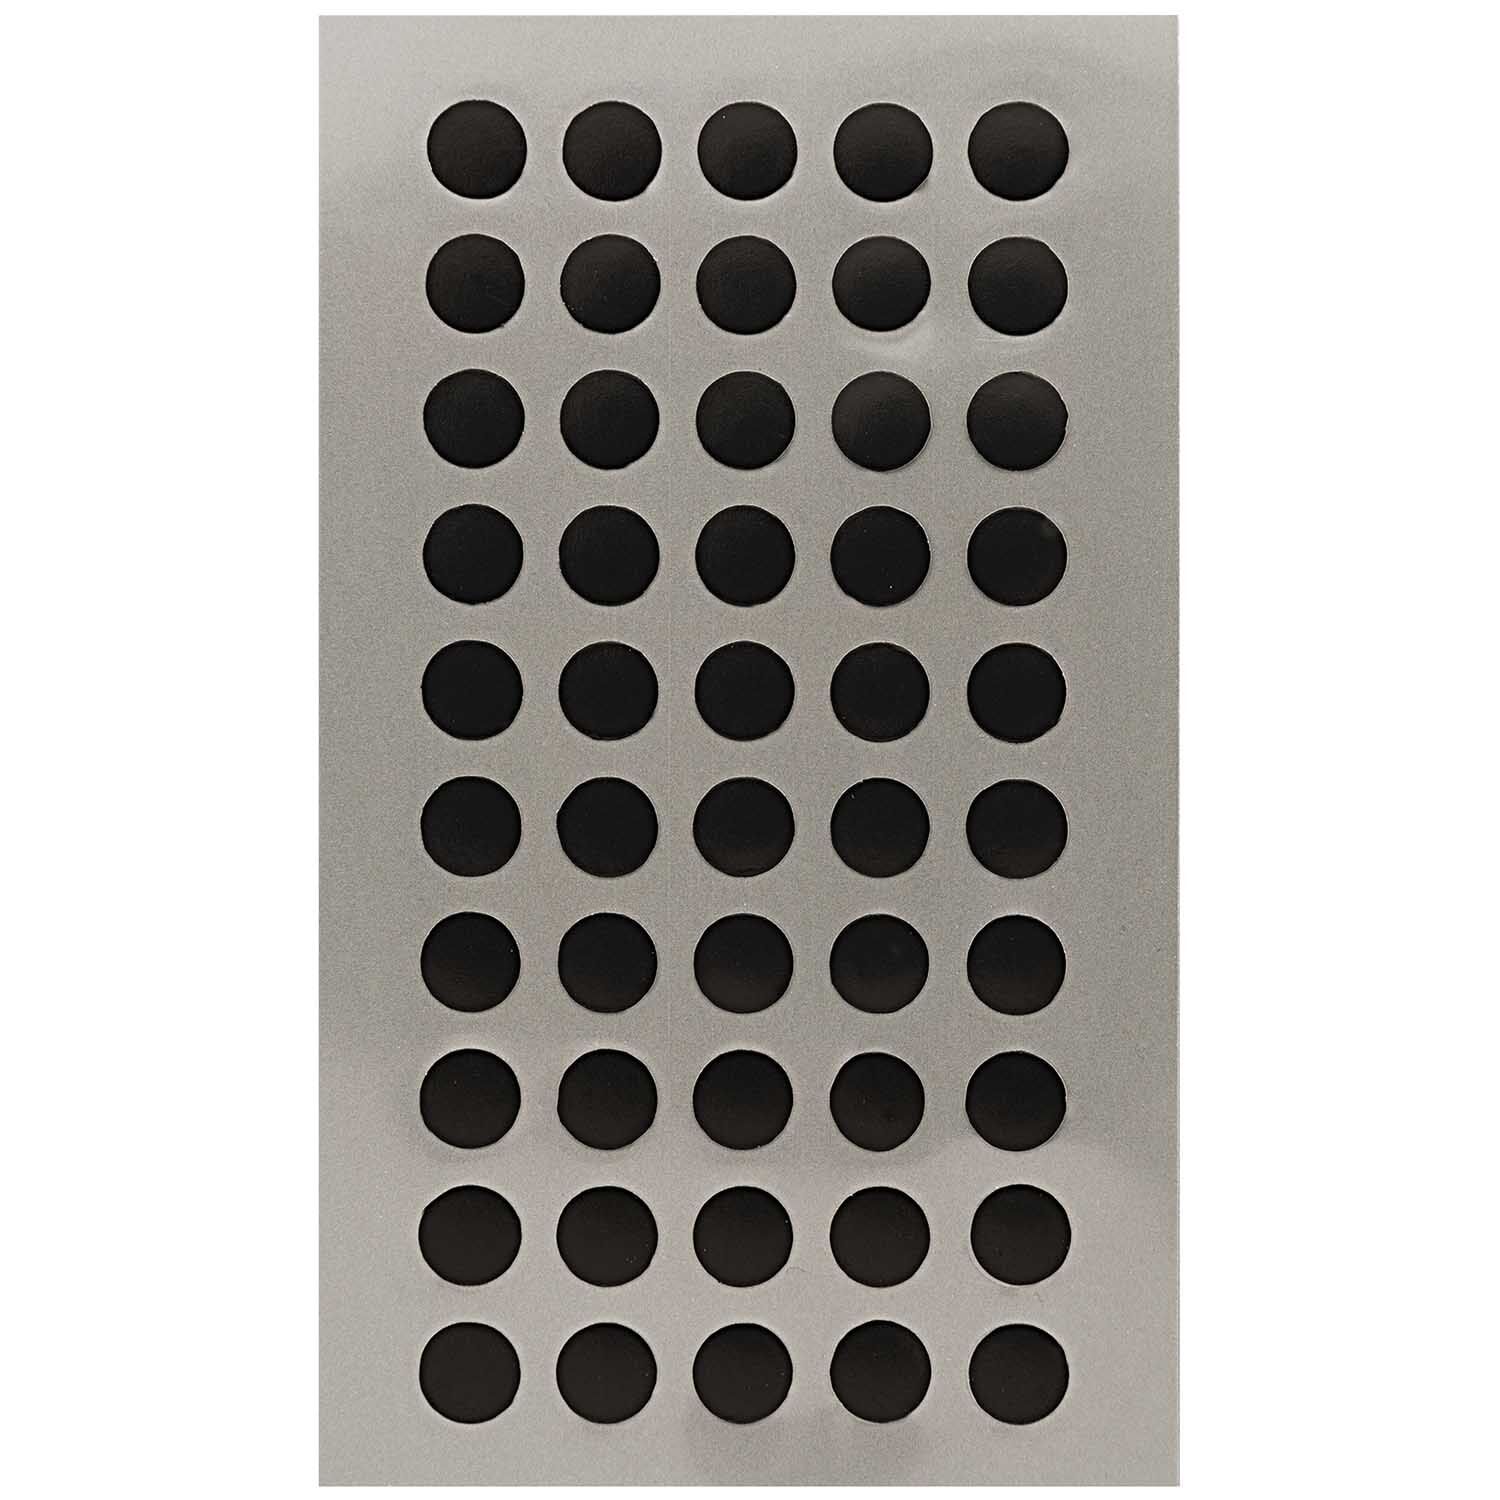 NEU Office Sticker, schwarze Punkte, 8 mm, 4 Blatt